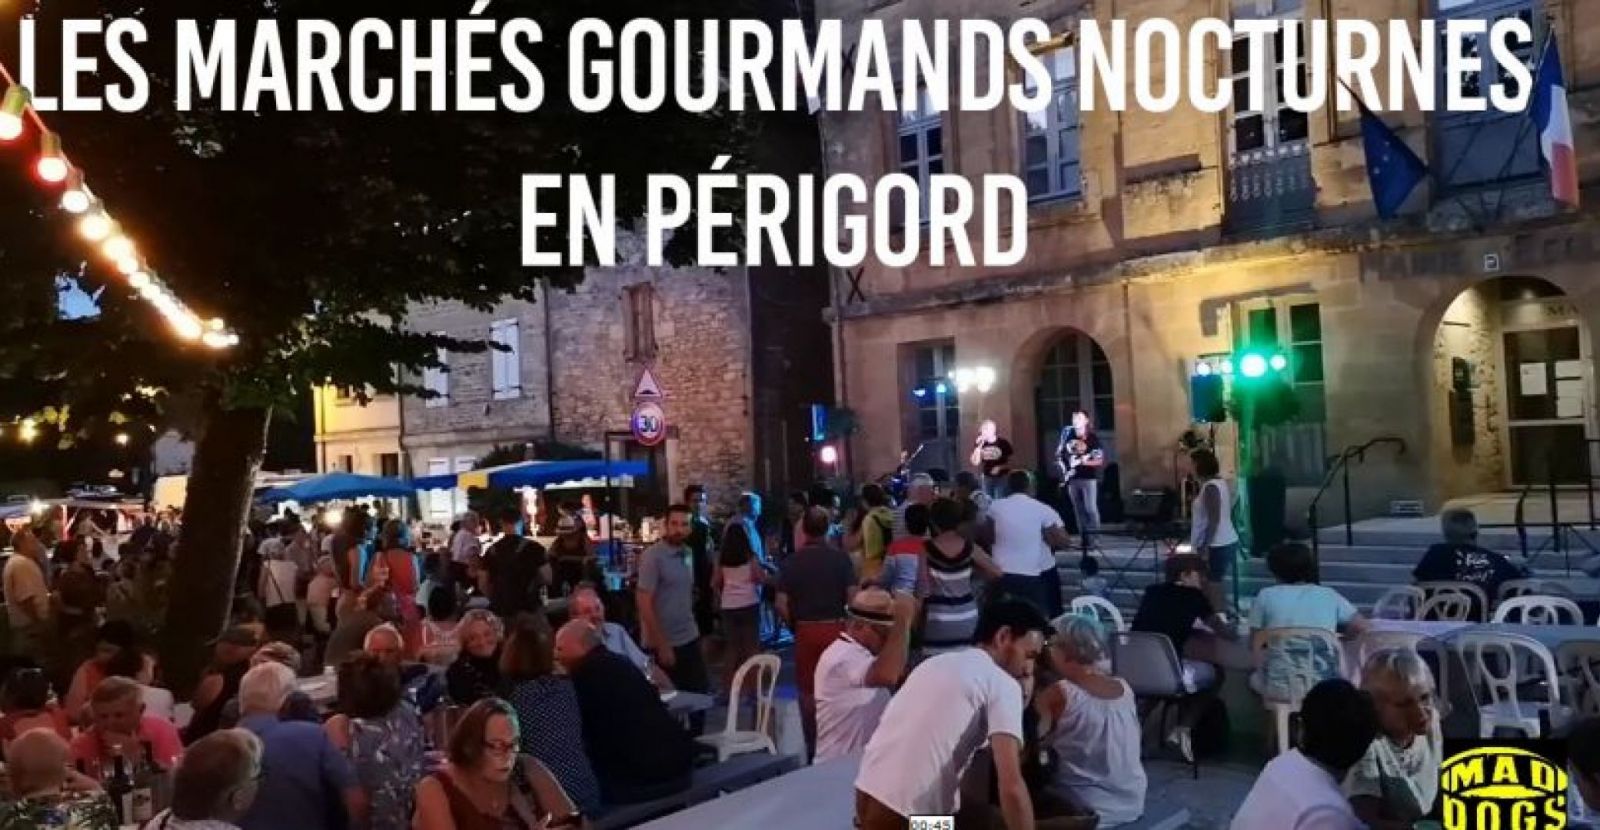 Gourmet and night markets in Périgord